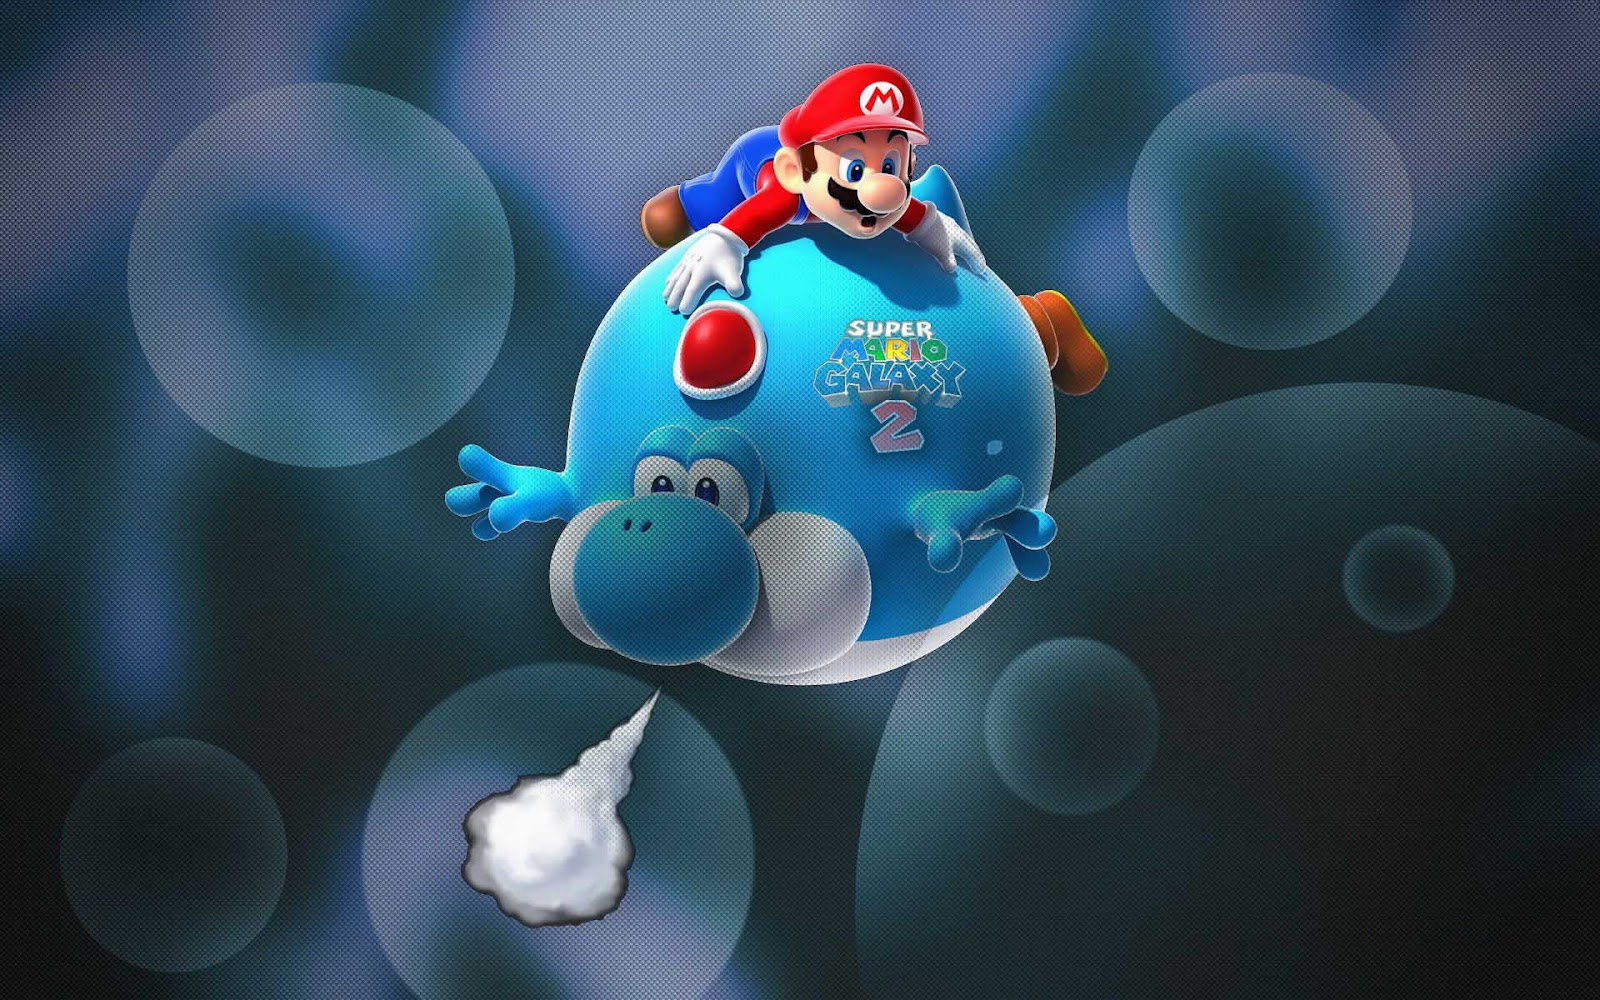 HD Super Mario Galaxy Game Wallpaper